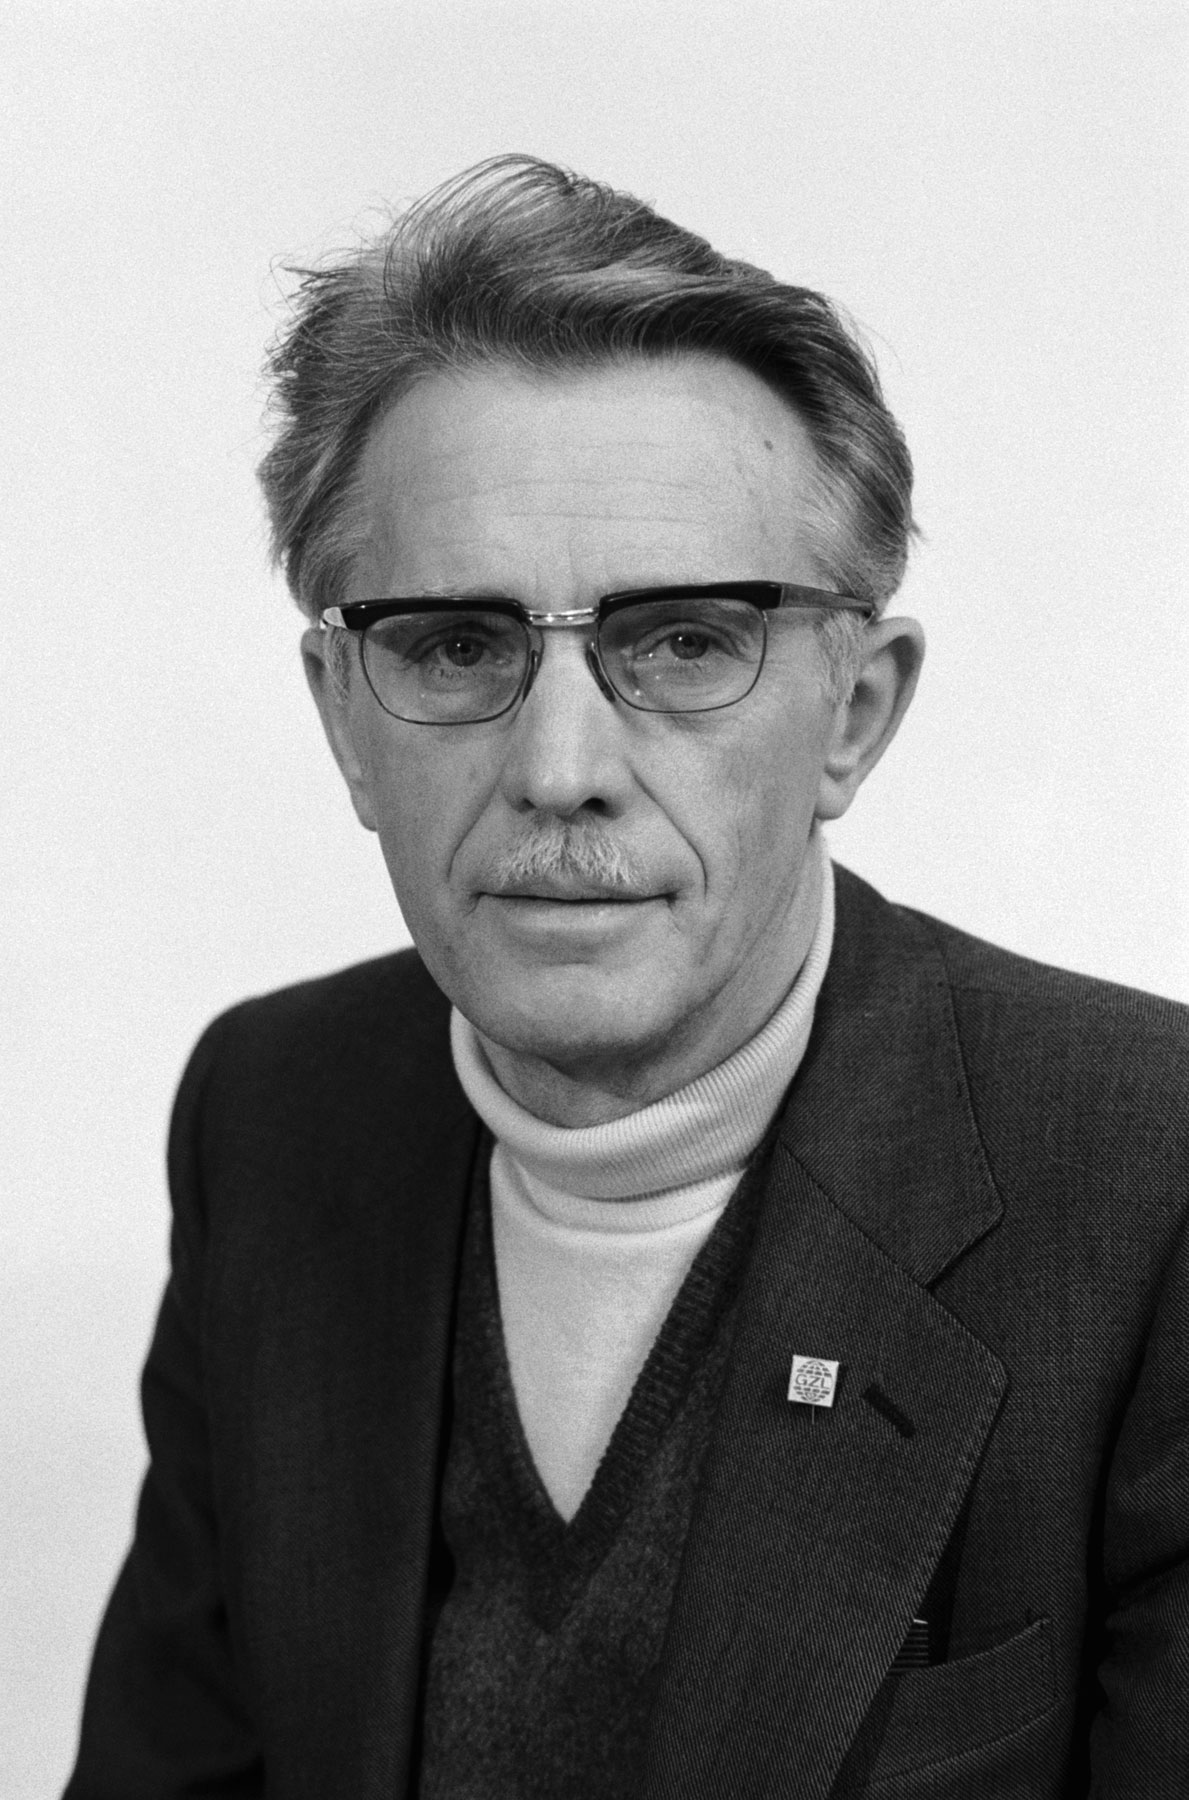 Milan Čopič (1925-1989)